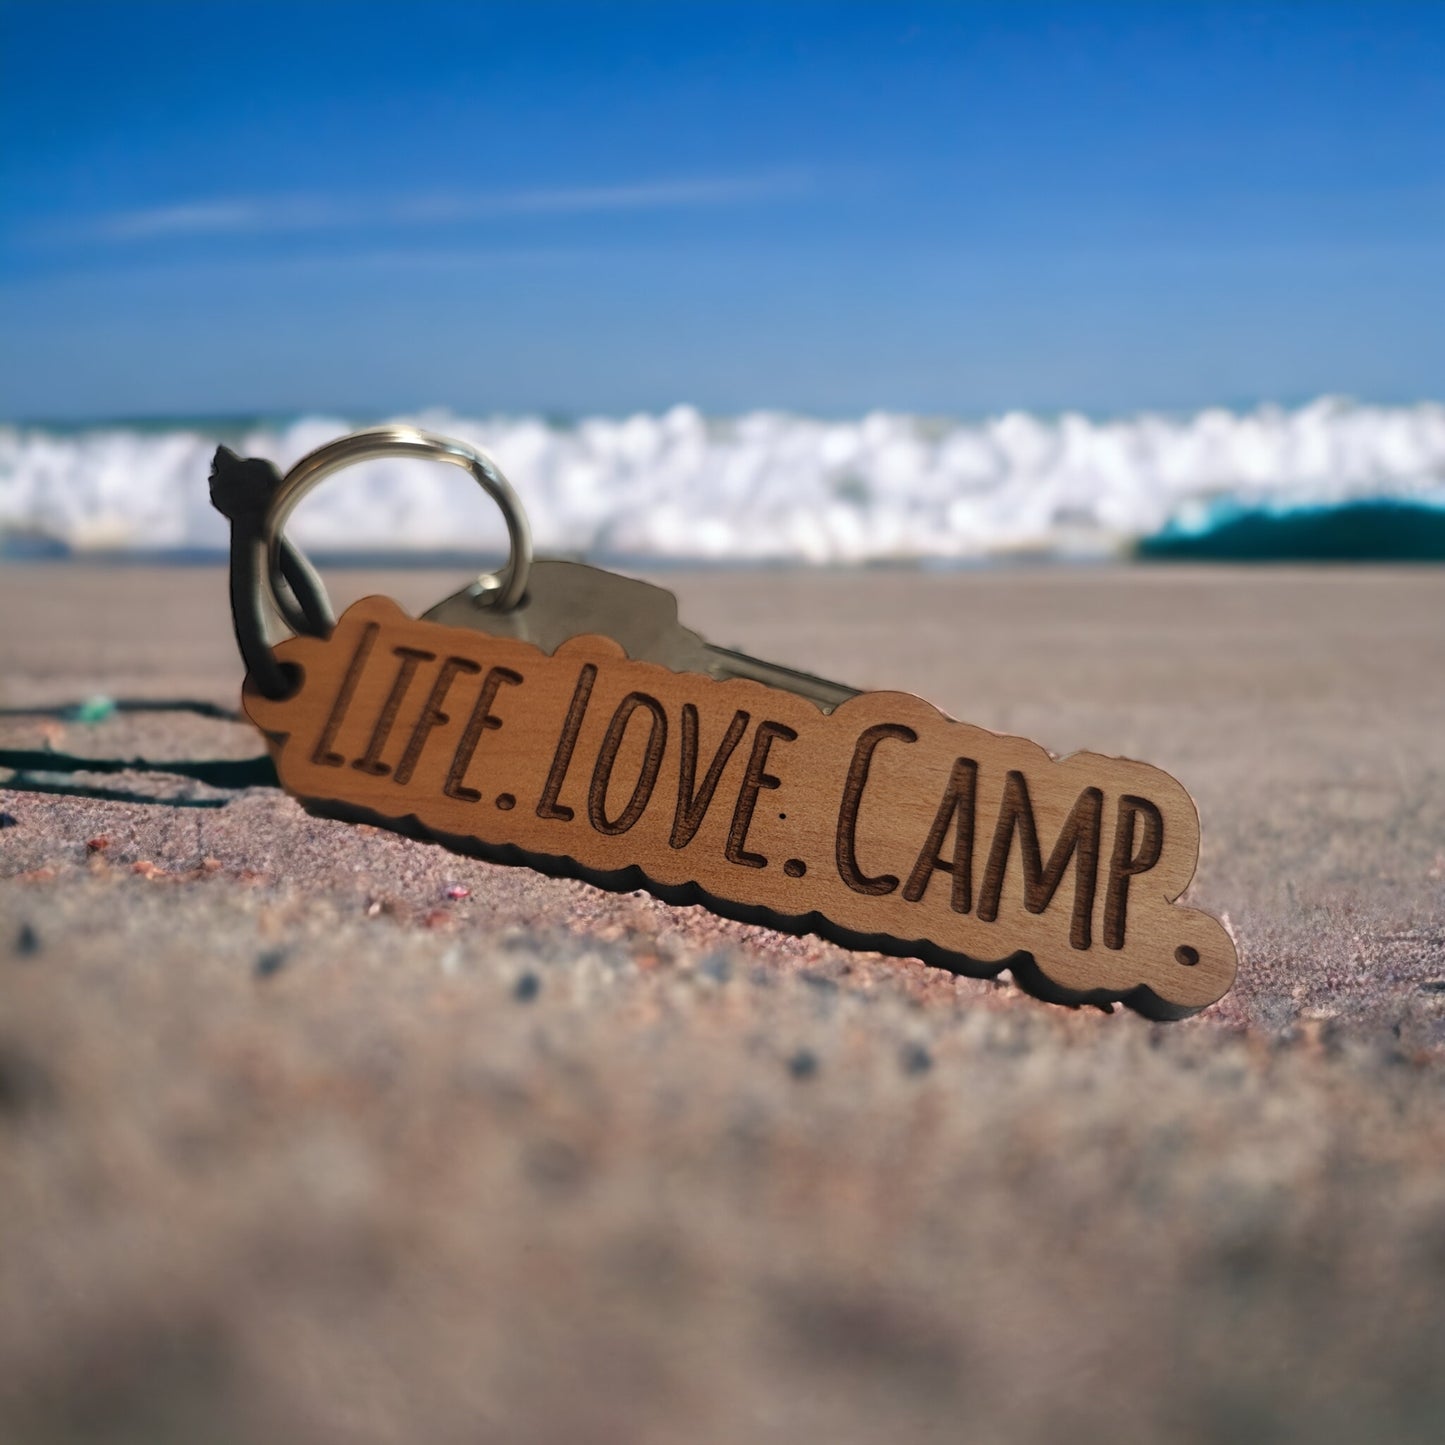 Schlüsselanhänger aus Wallnussholz "LIFE. LOVE. CAMP."